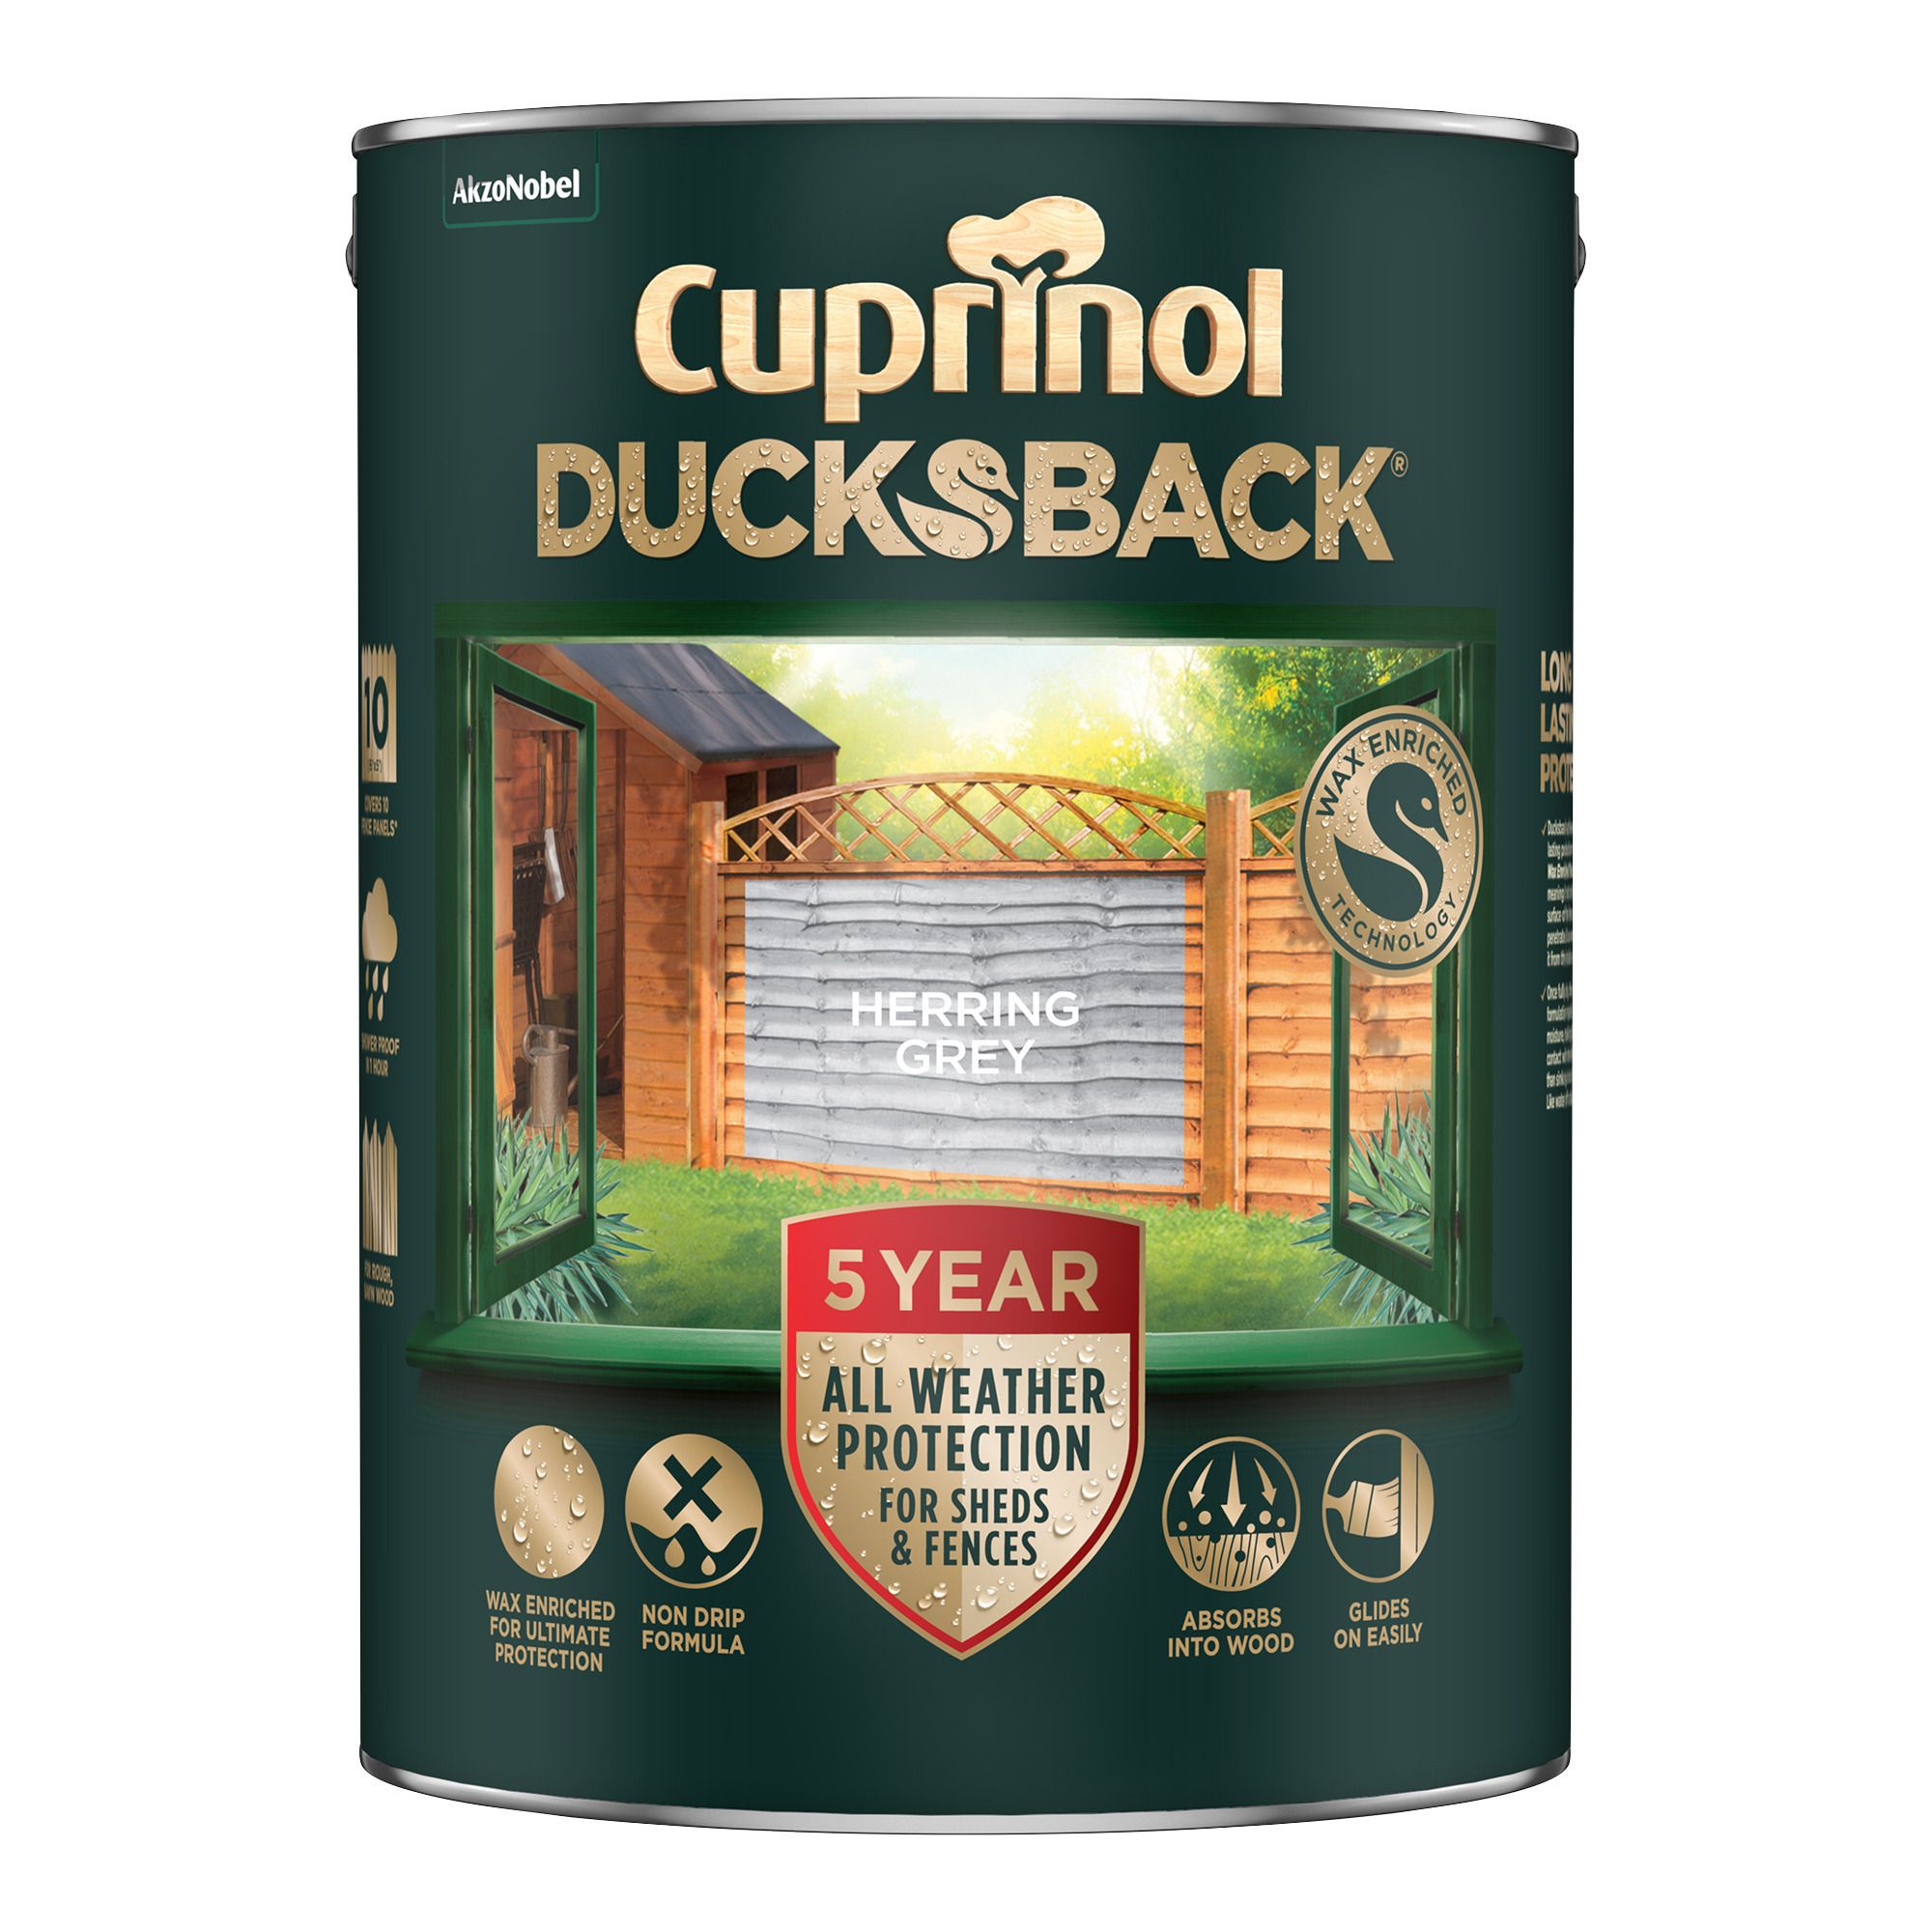 Cuprinol Ducksback Herring Grey Matt Exterior Wood paint, 5L Tin